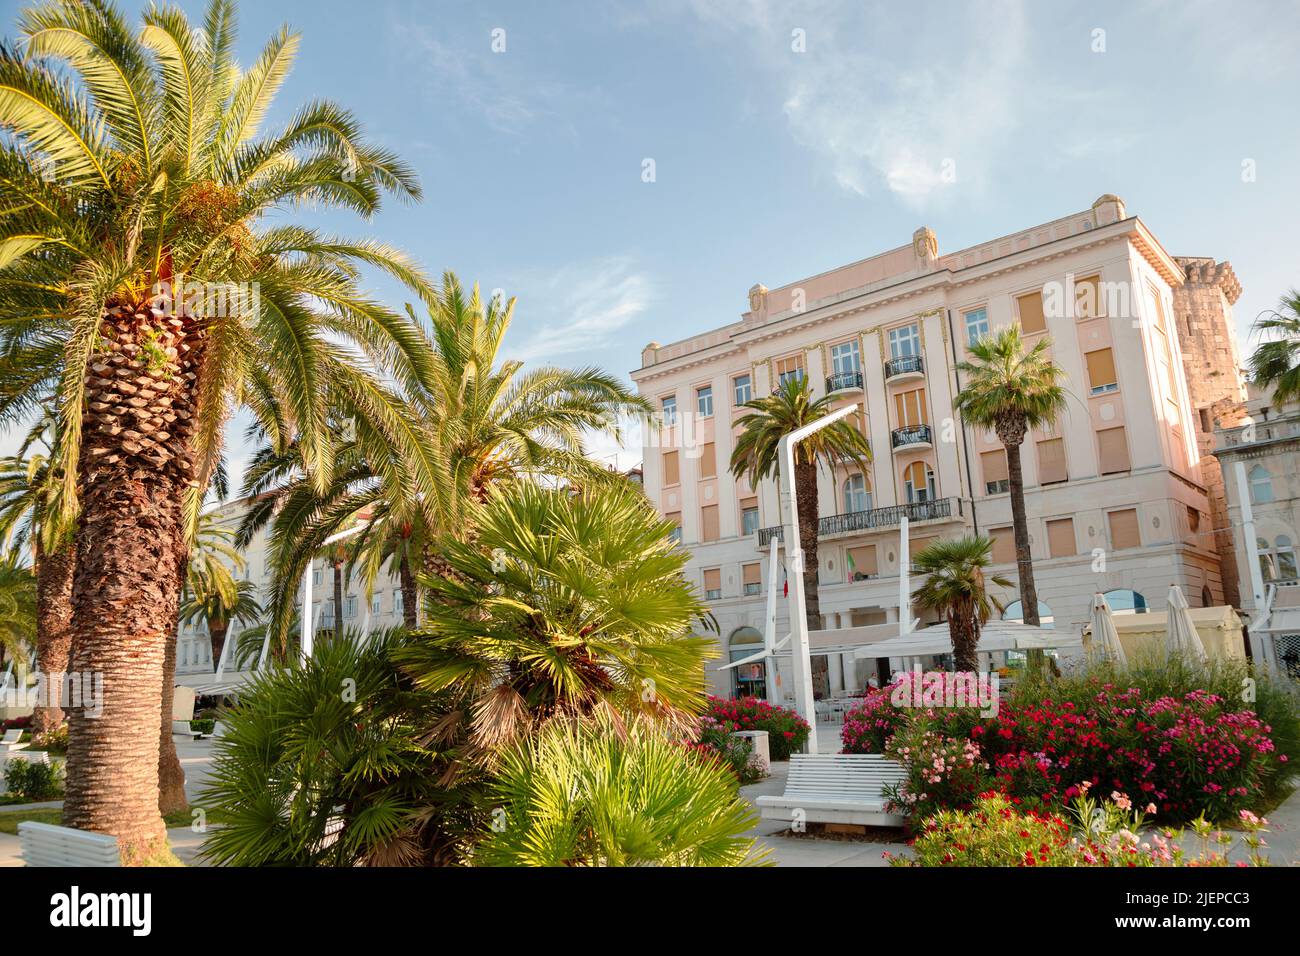 Riva promenade street with palm trees in Split, Croatia Stock Photo